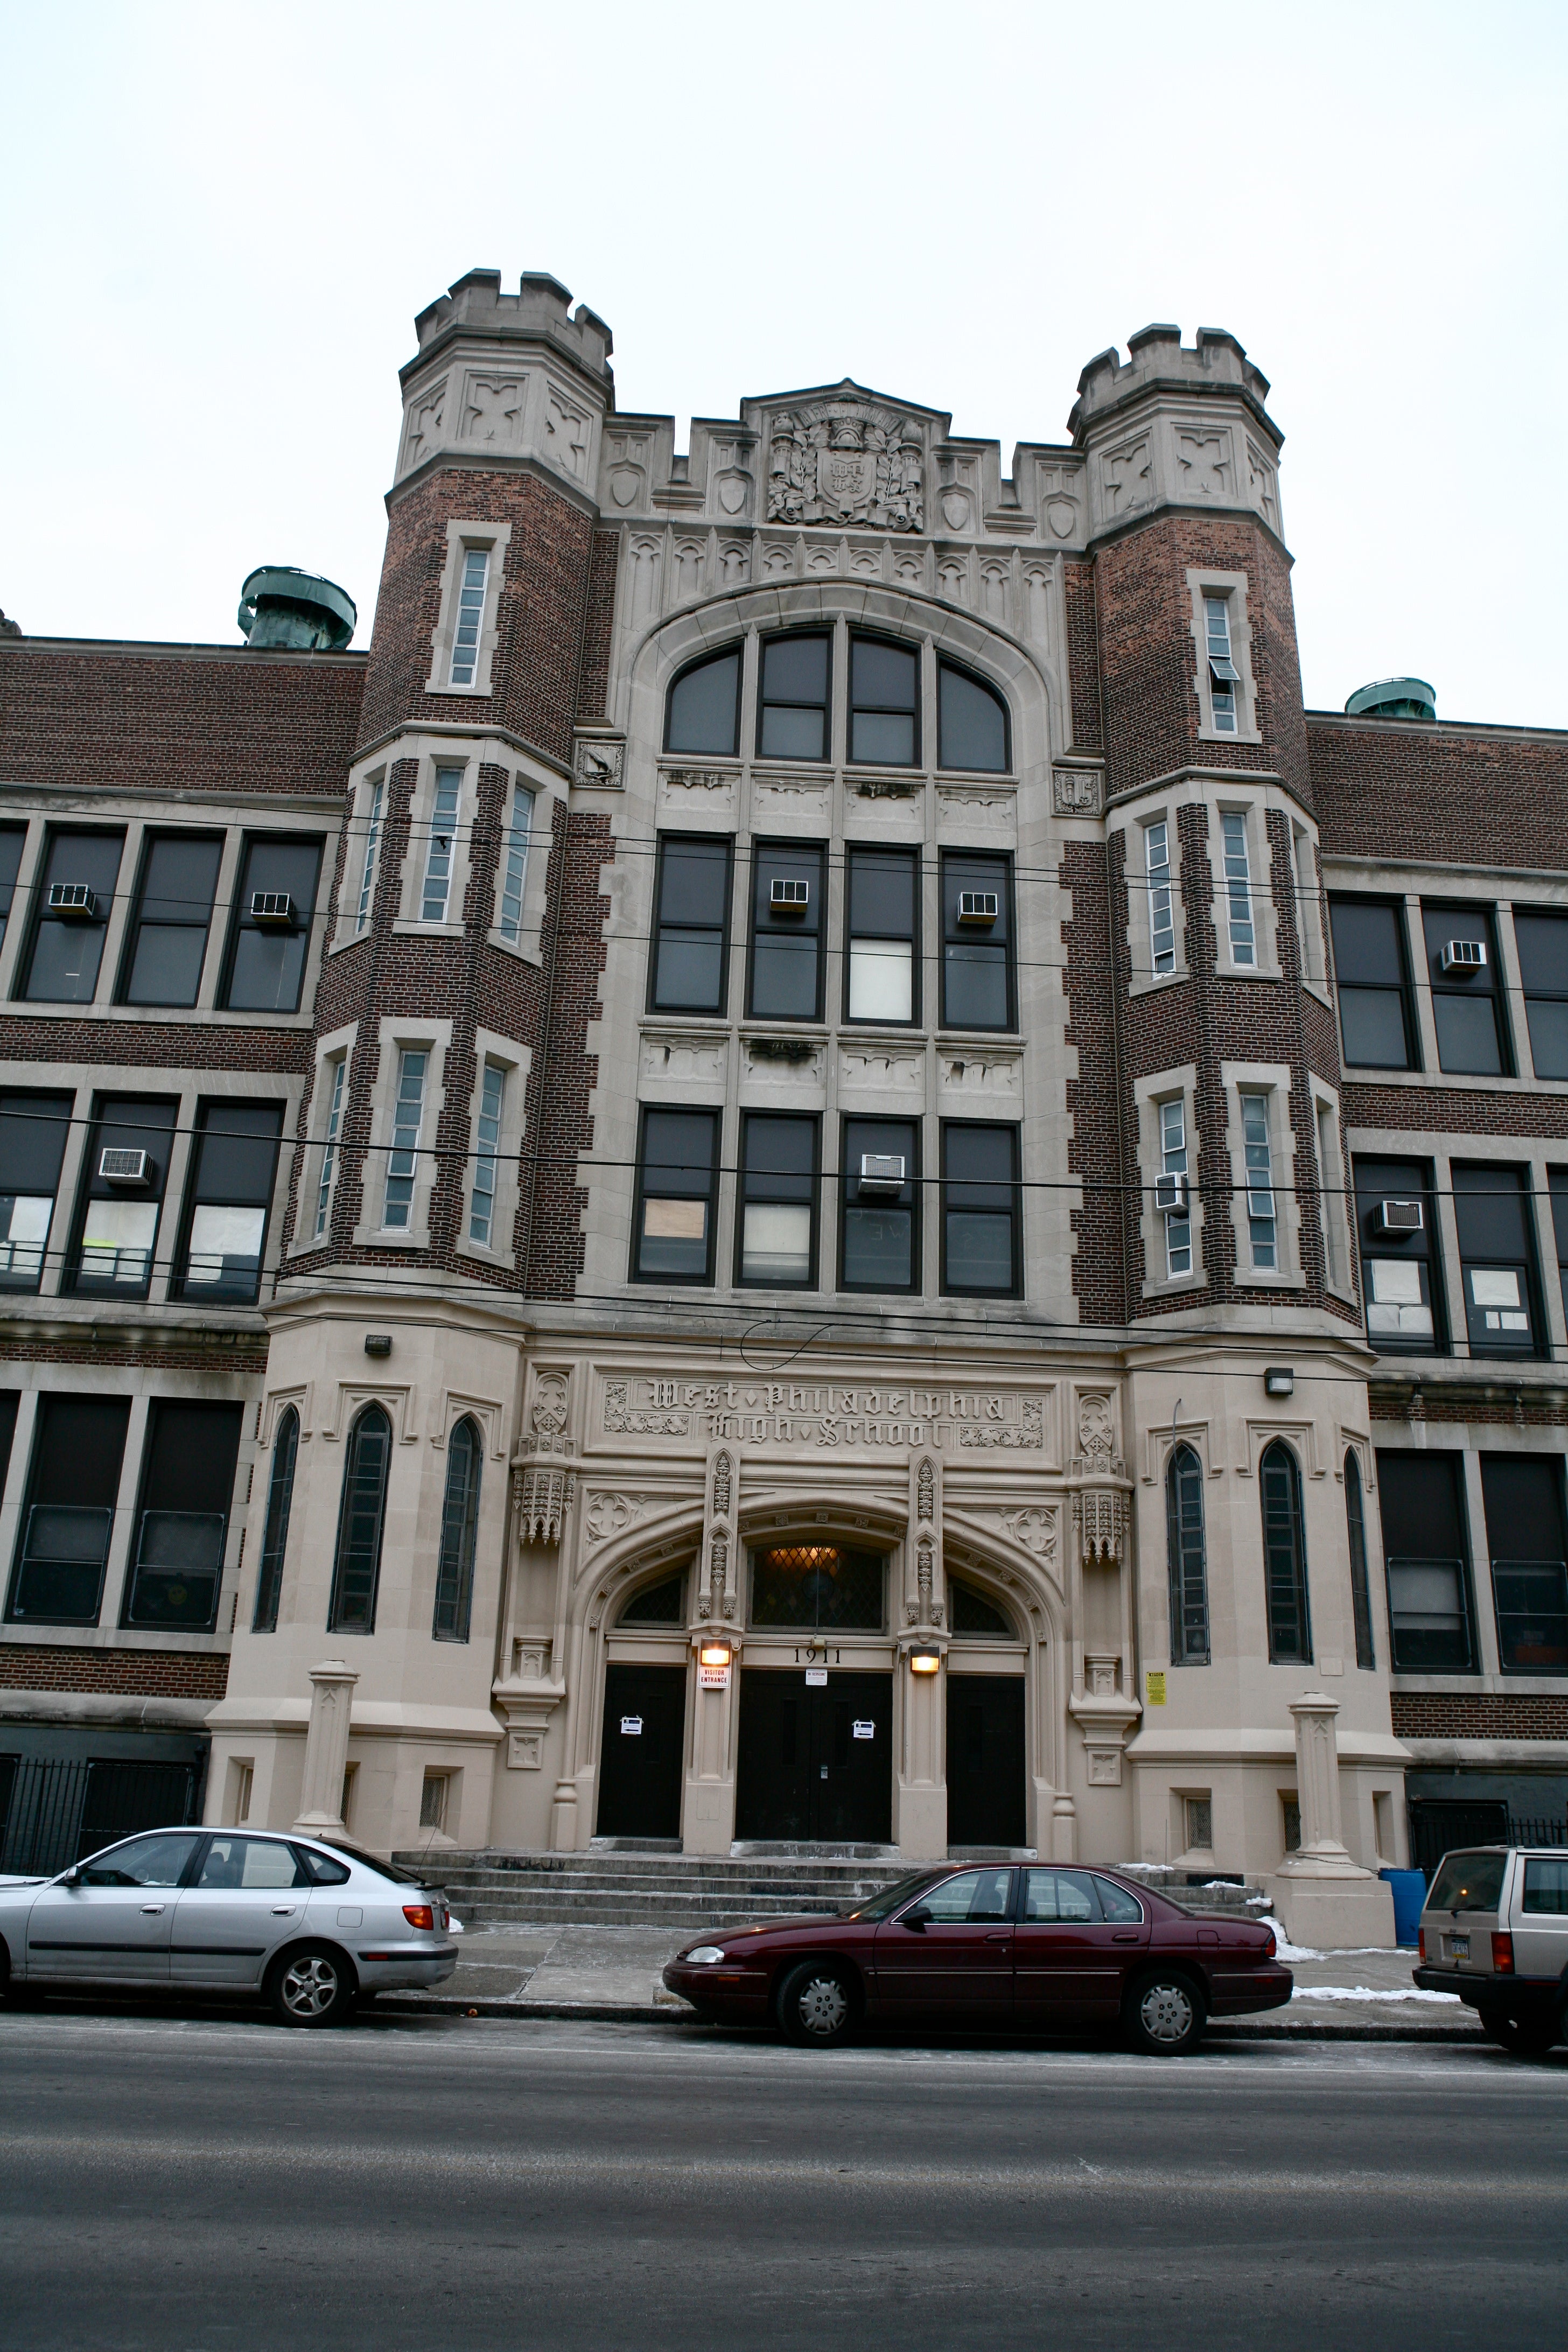 Preservationists urge scrutiny of older public school buildings